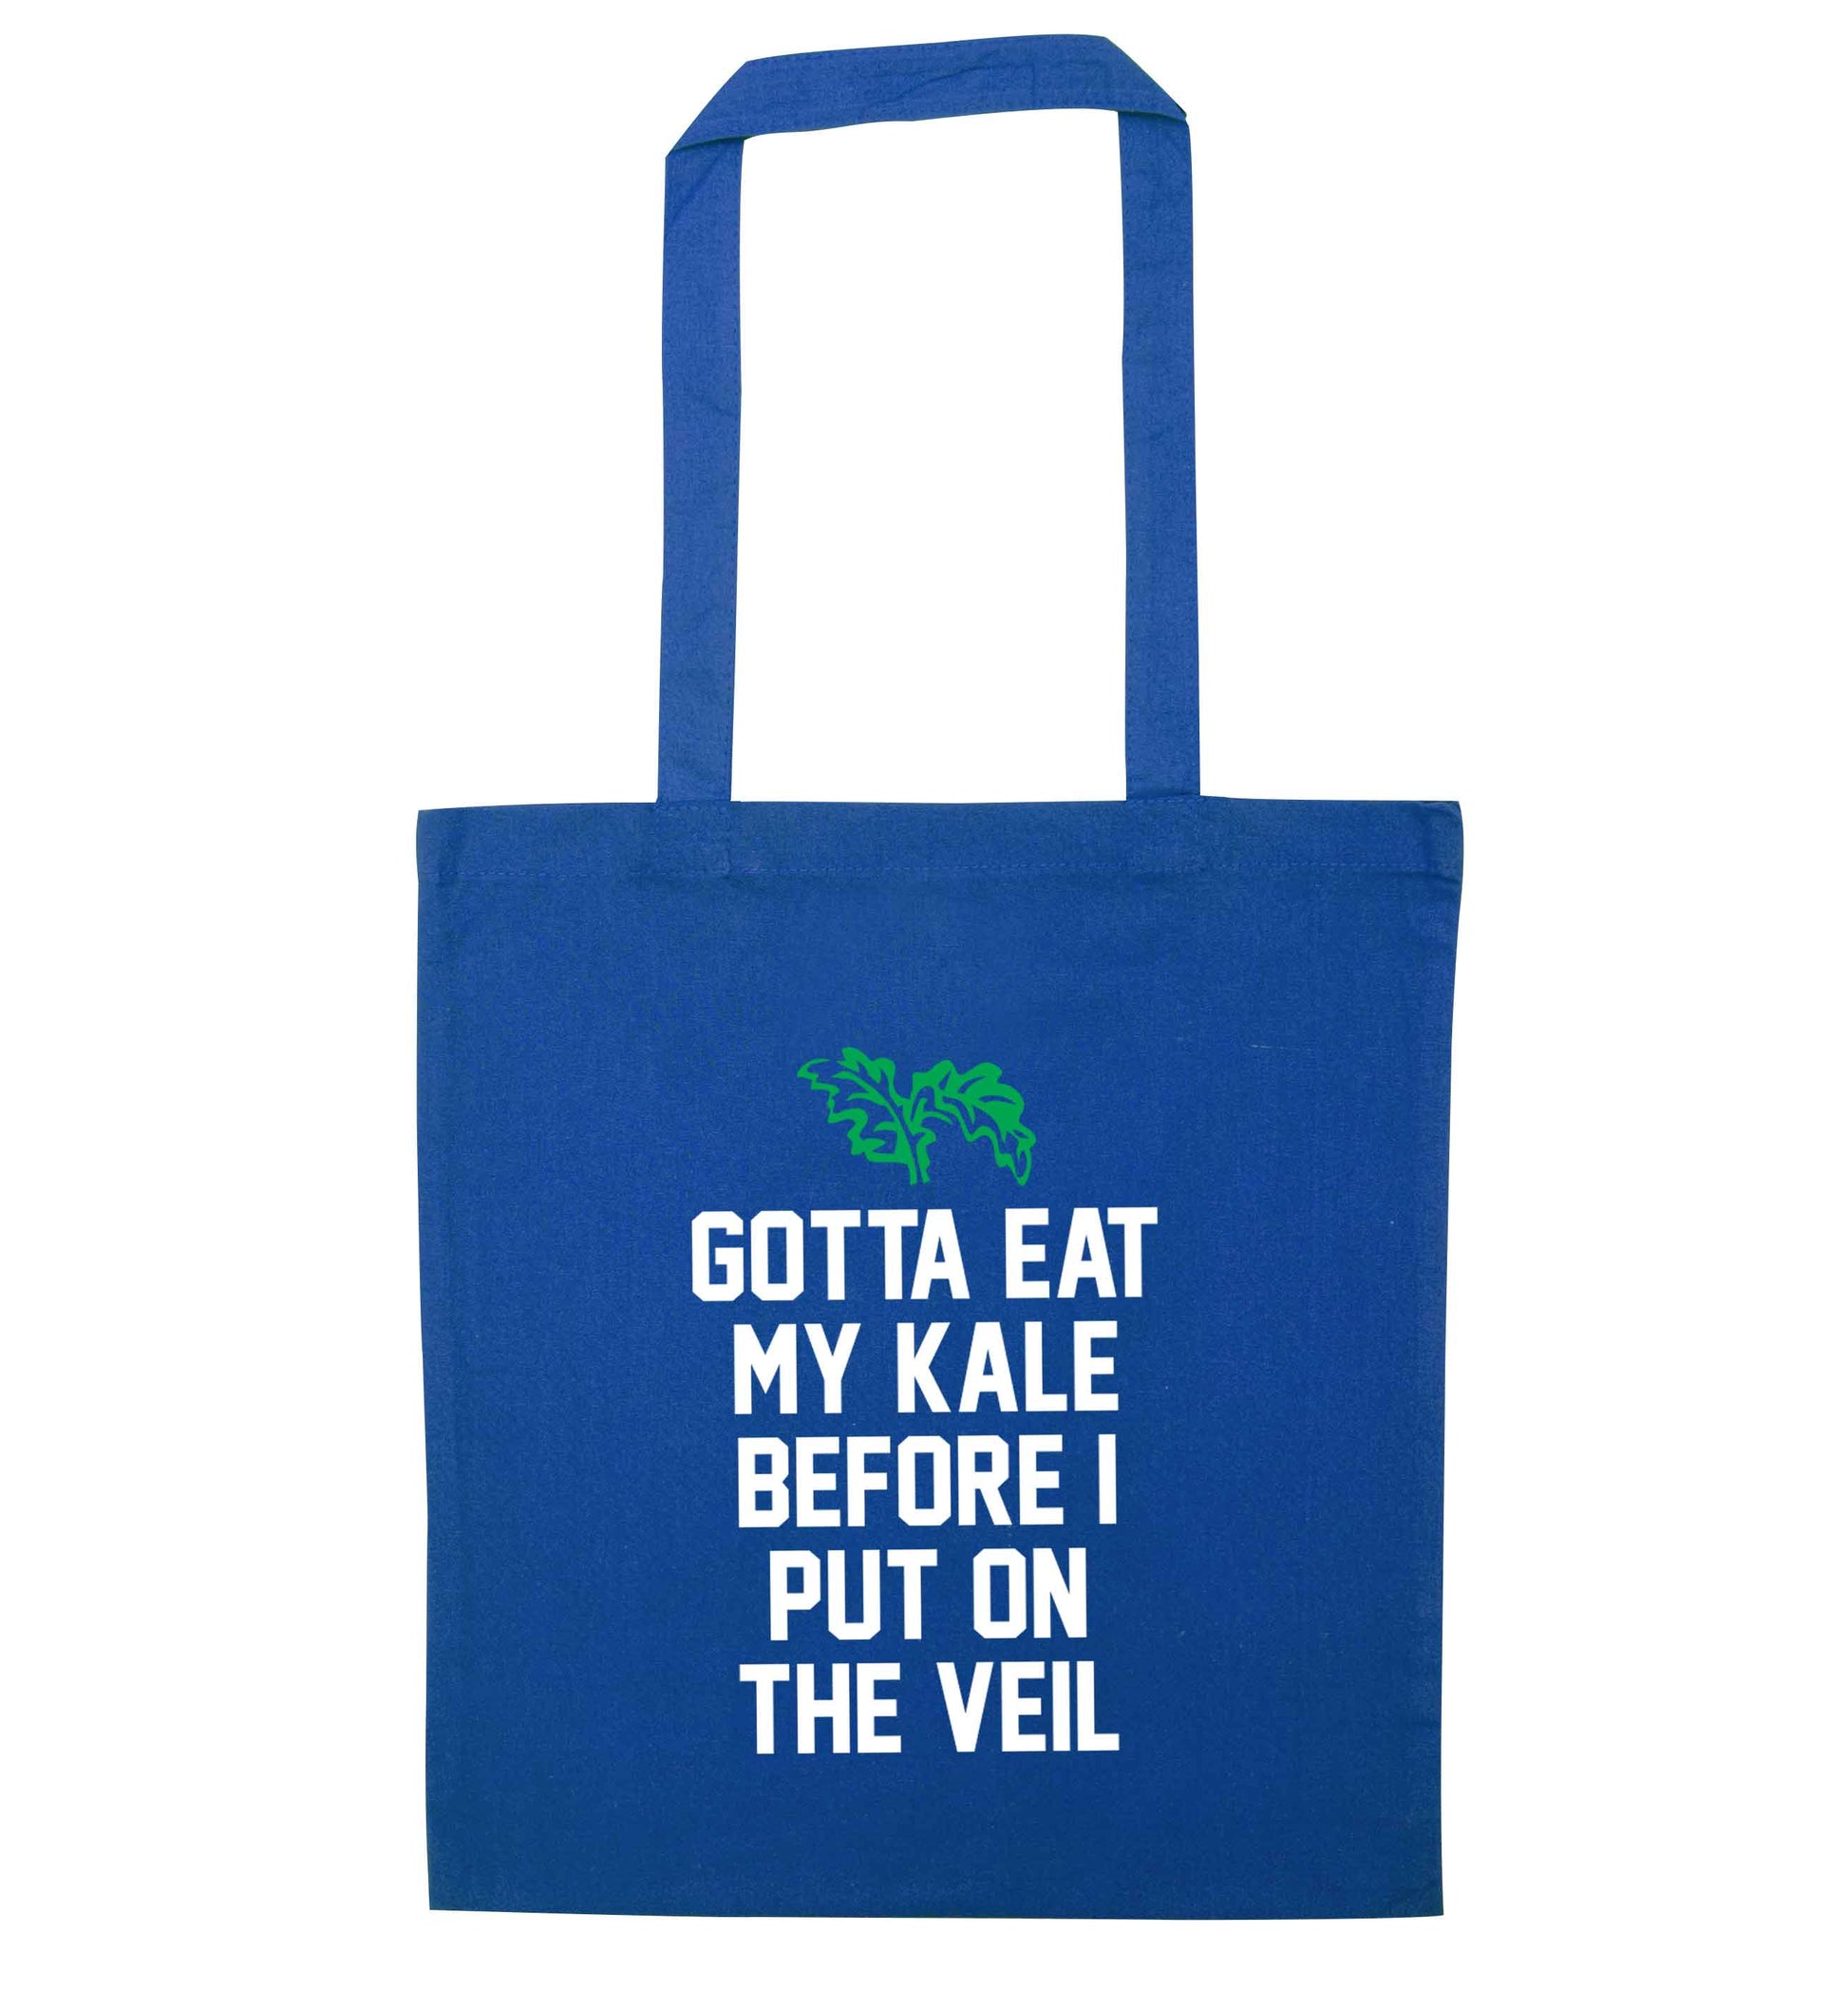 Gotta eat my kale before I put on the veil blue tote bag